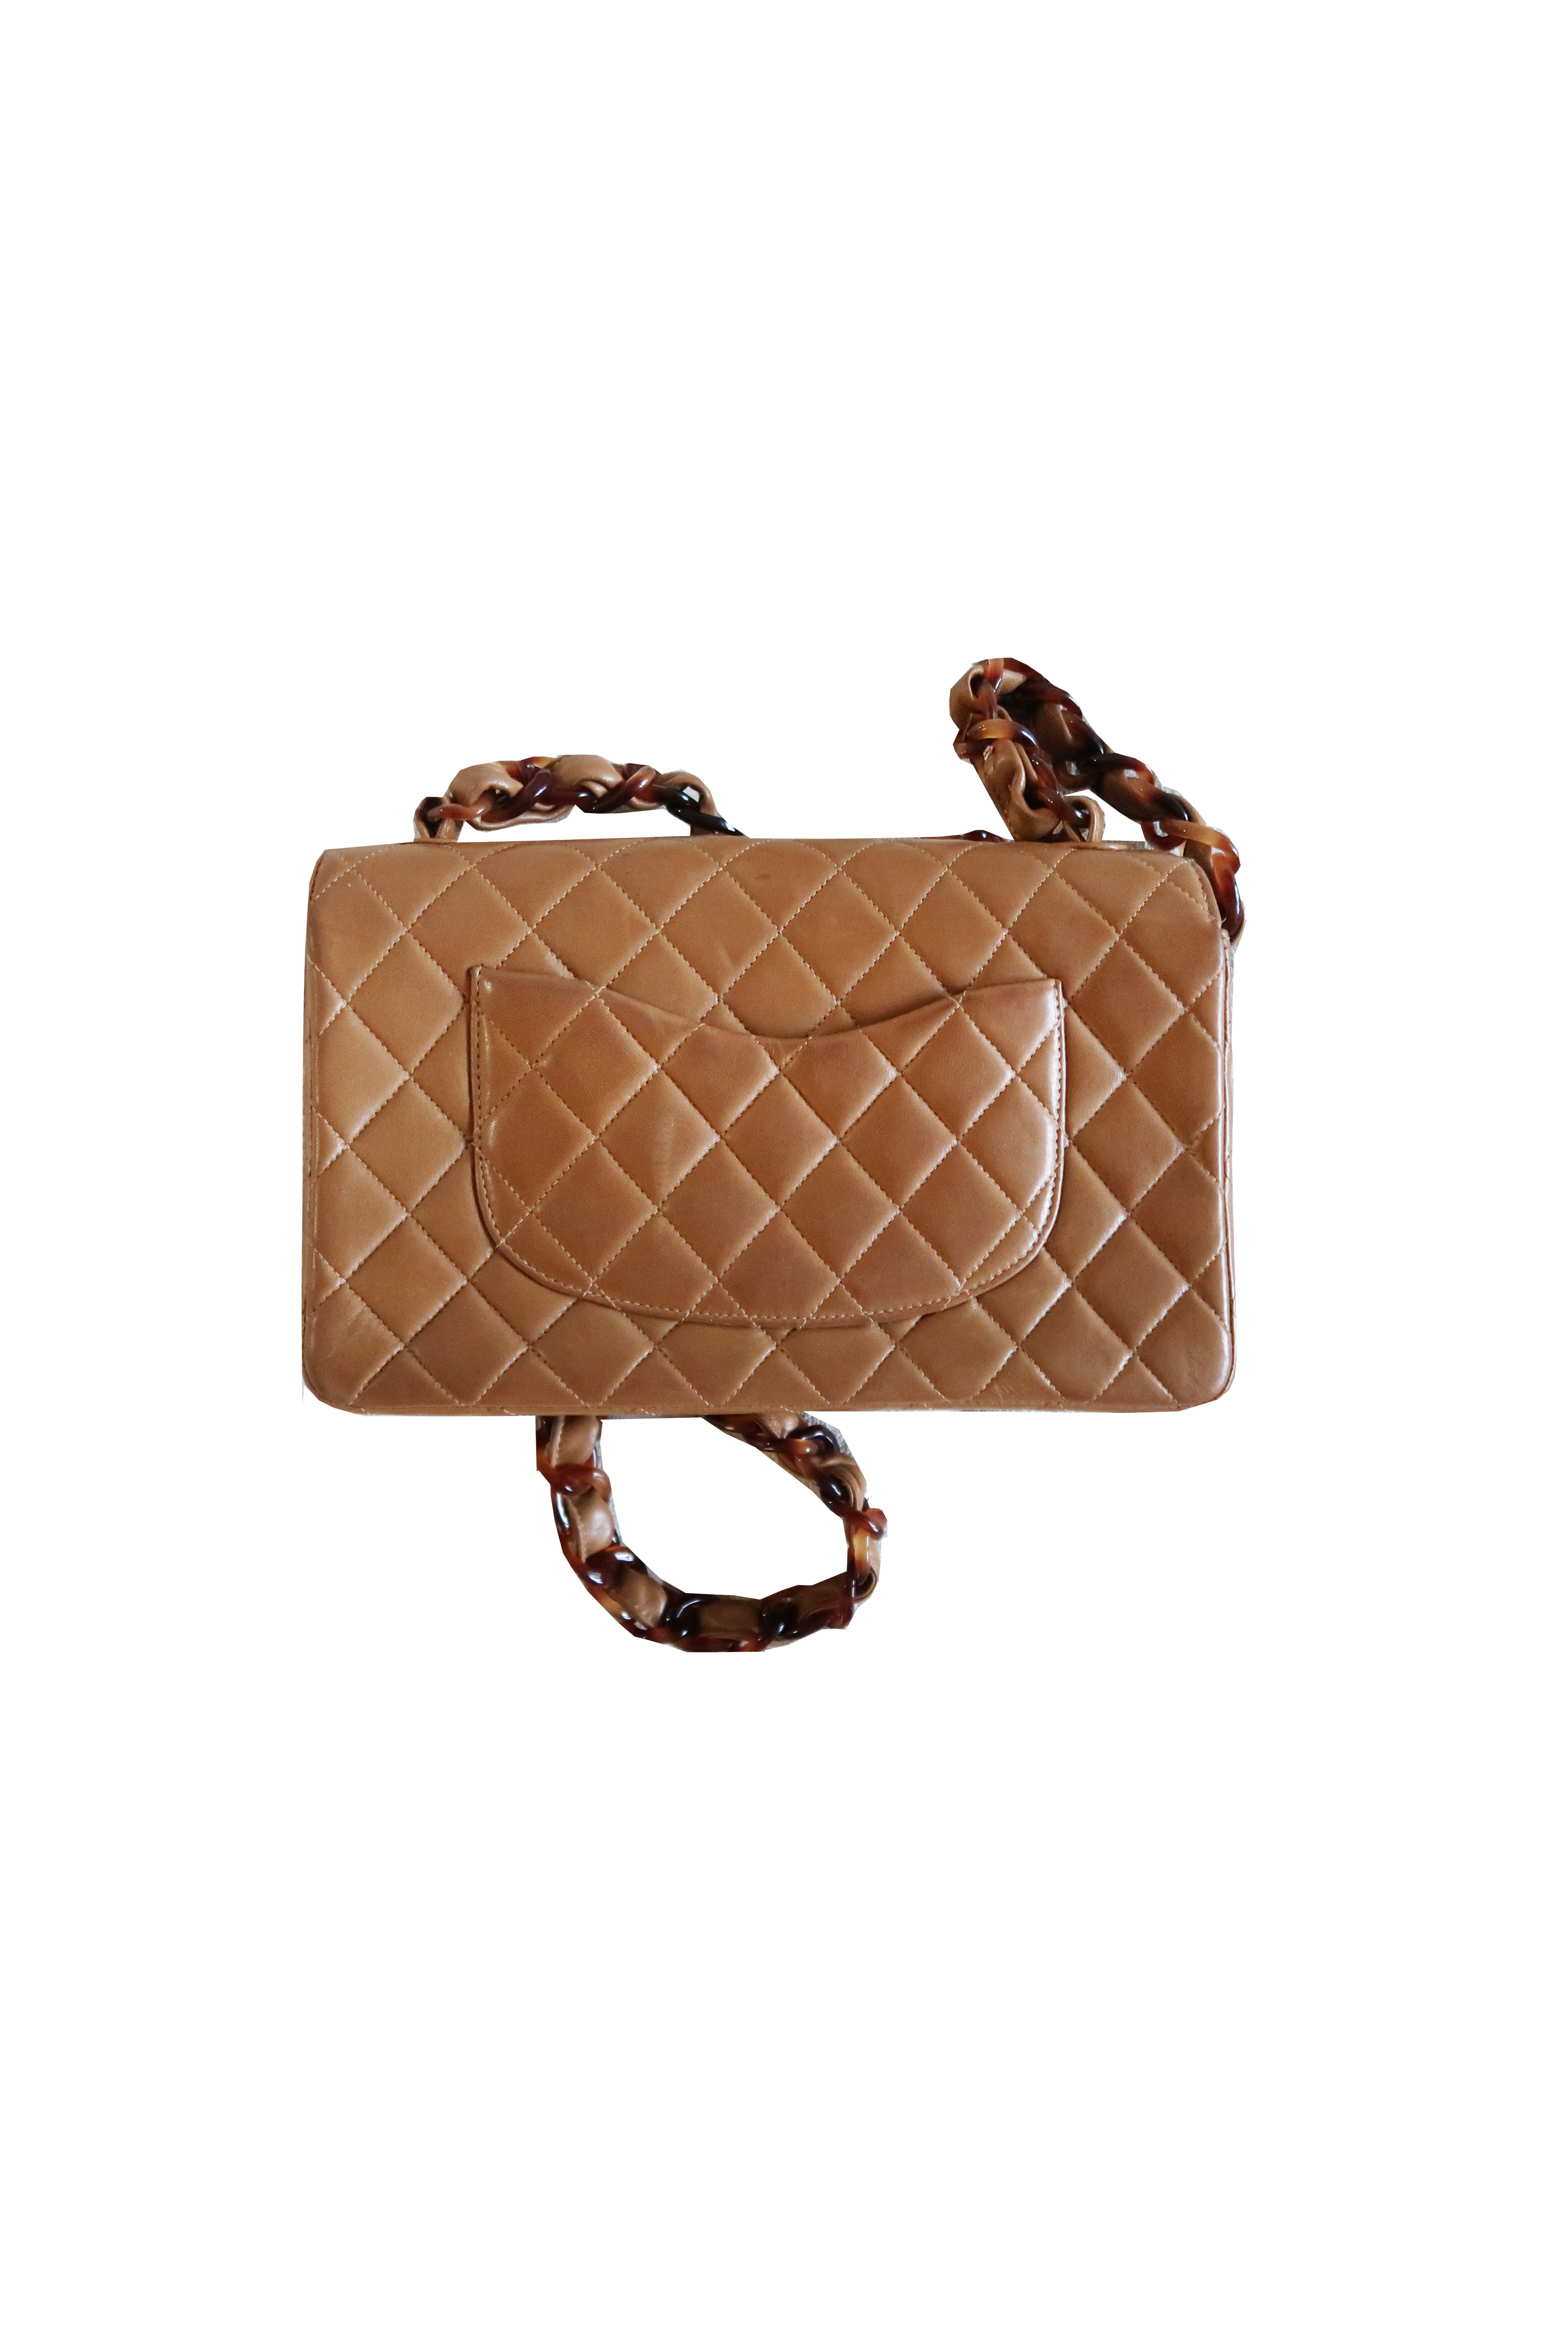 cream chanel handbag